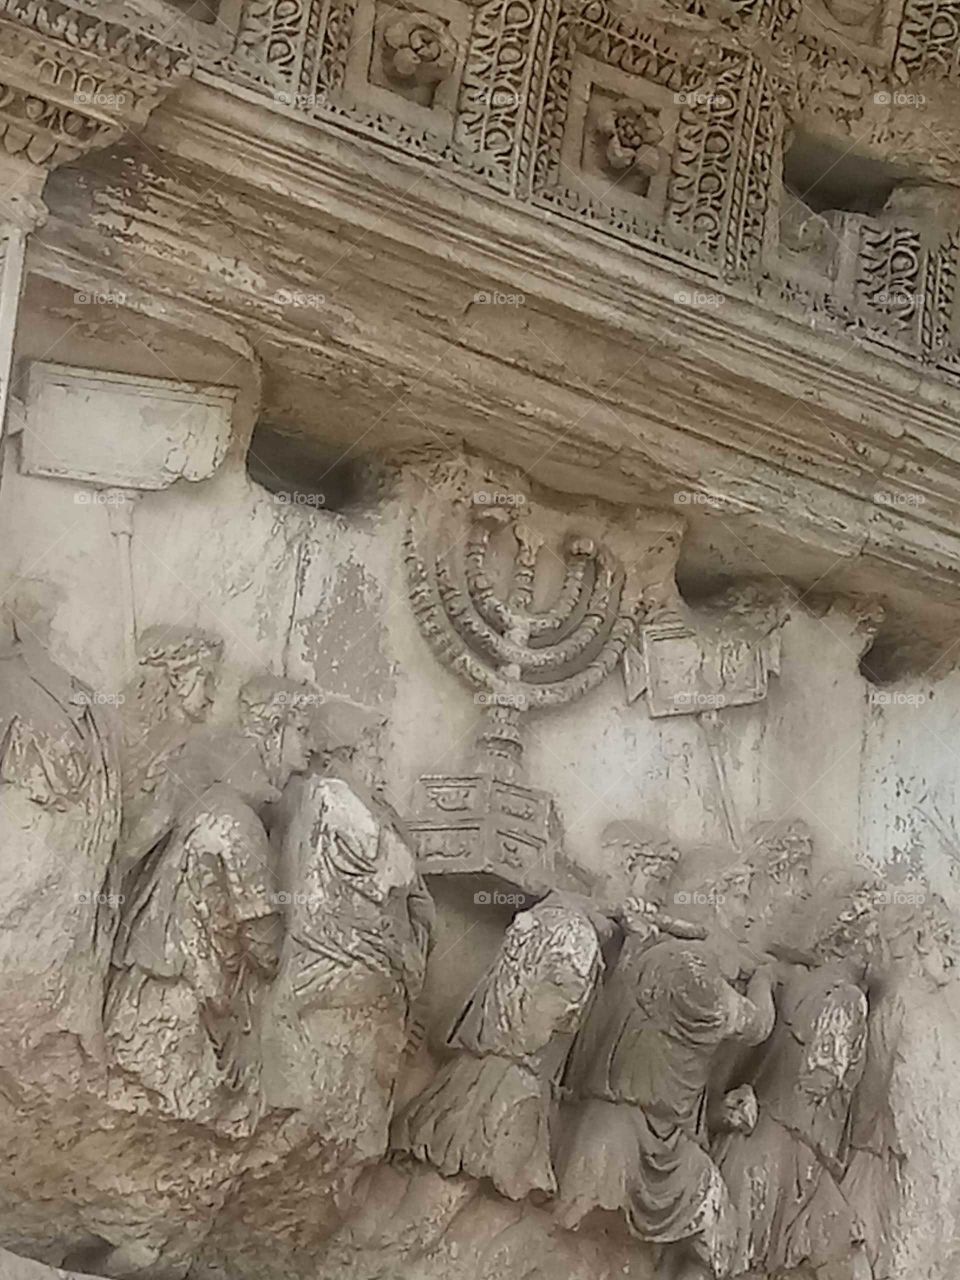 Menorah in the Arch of Titus